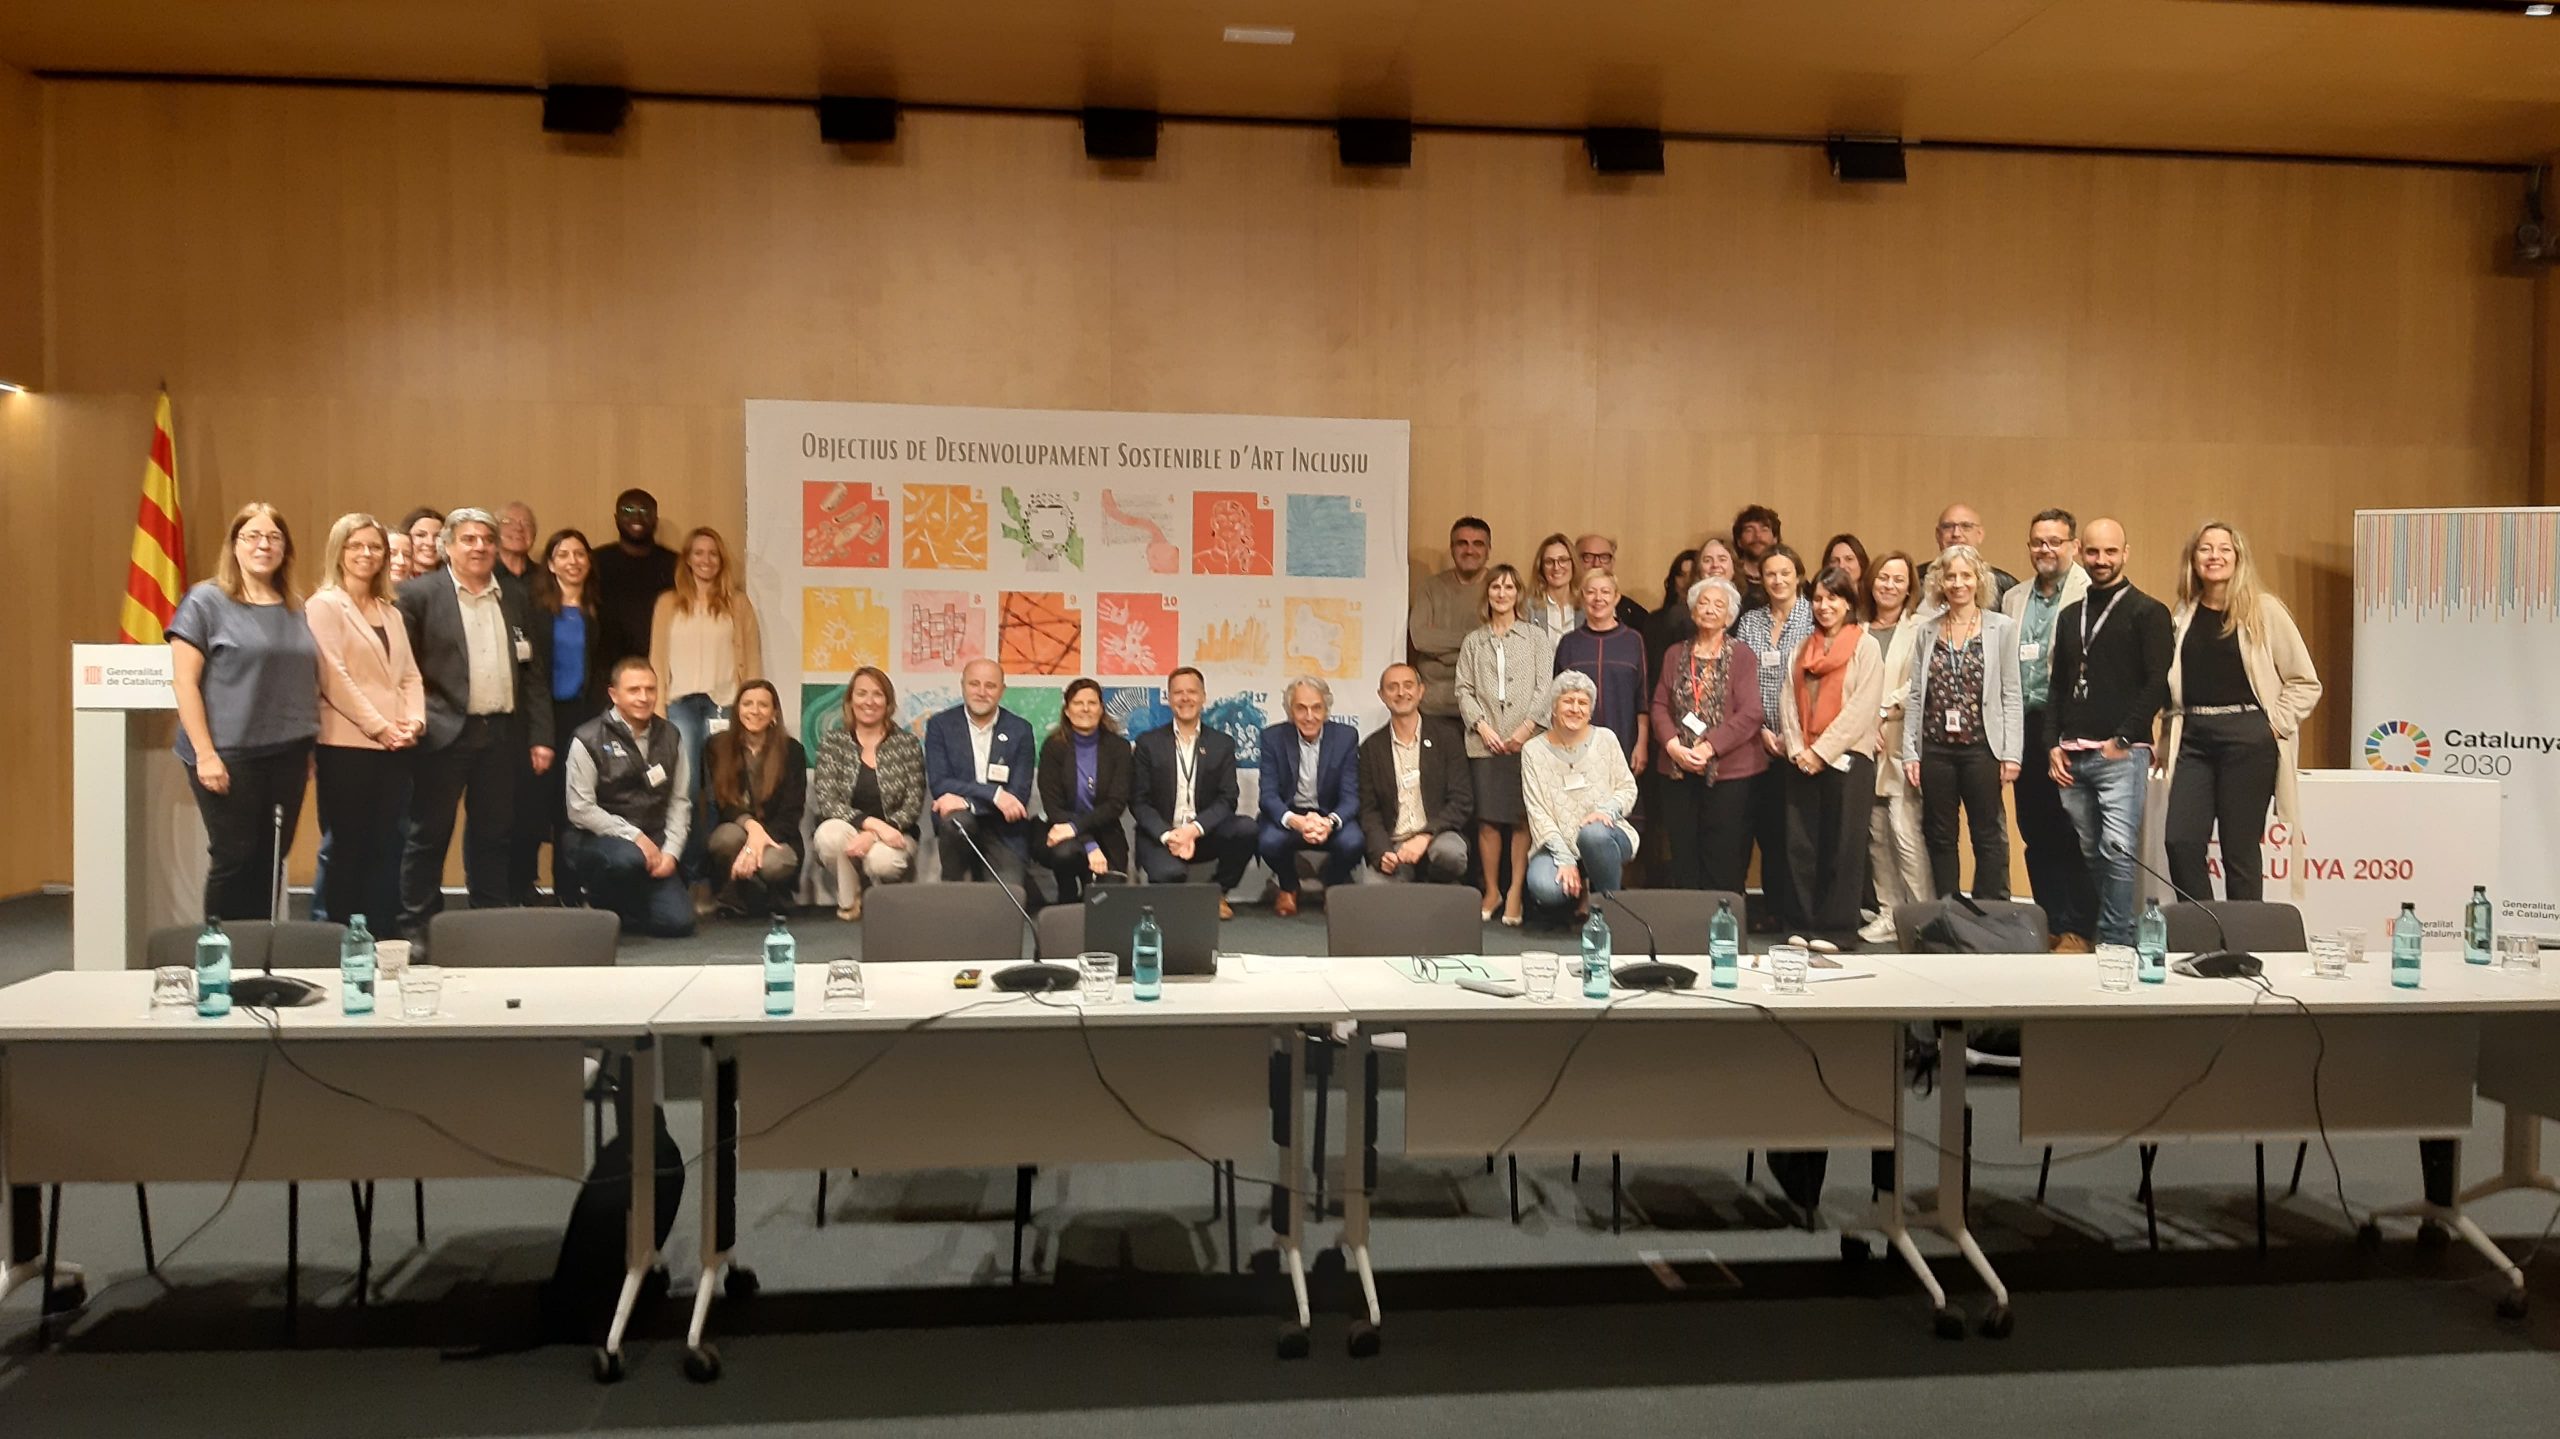 Photocall ODS Art Inclusiu Aliança Catalunya 2030